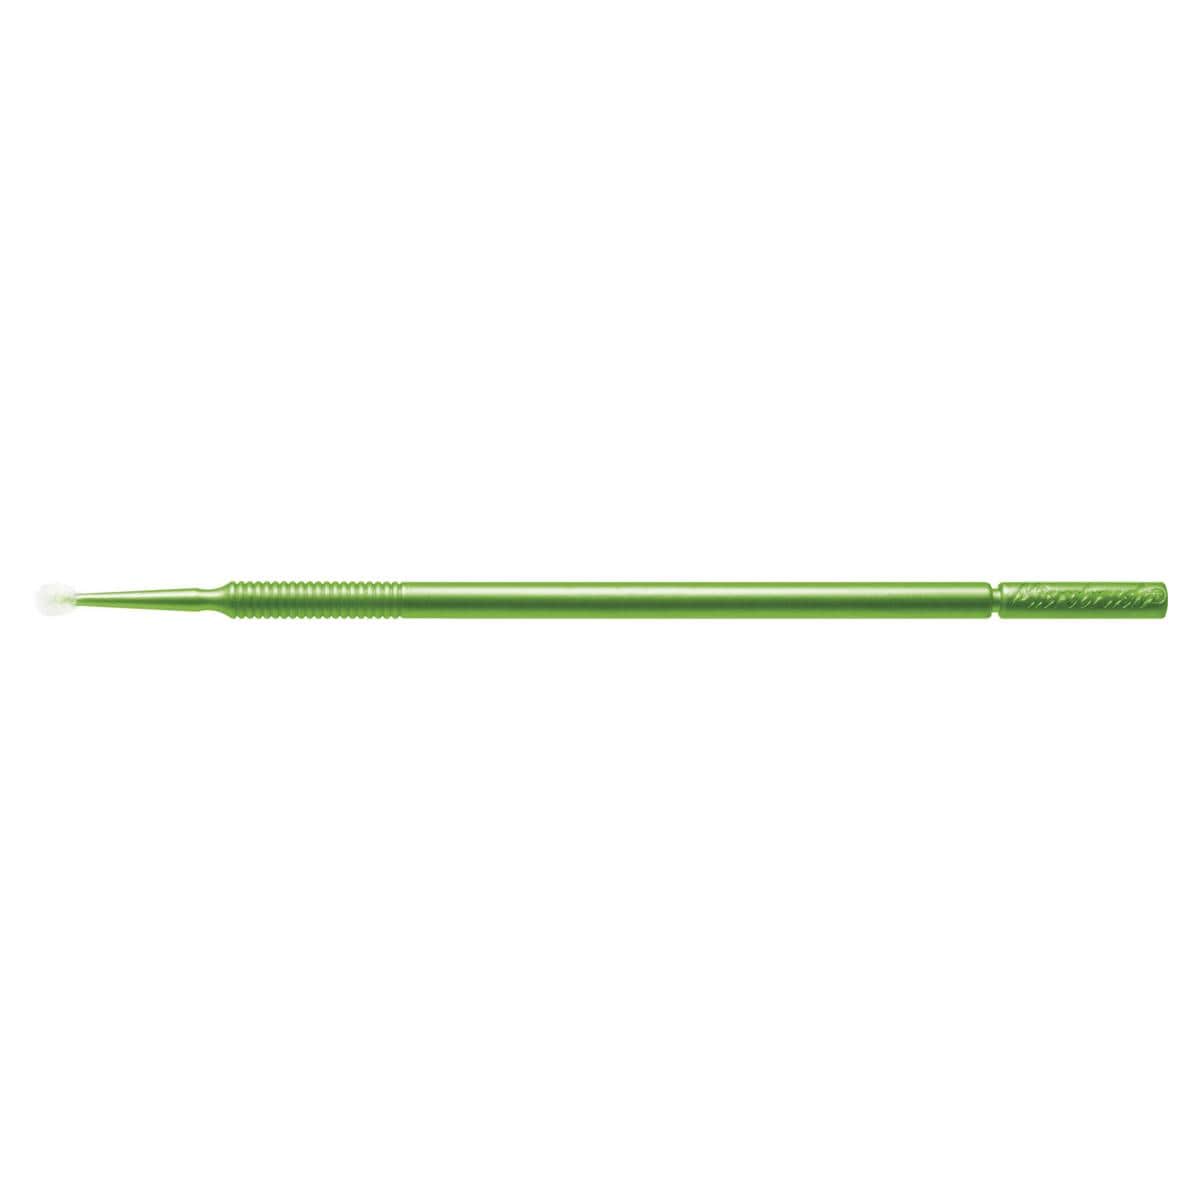 Microbrush® Plus Applikatoren - Nachfüllpackung - Grün, regulär, Ø 2,0 mm, Packung 100 Stück